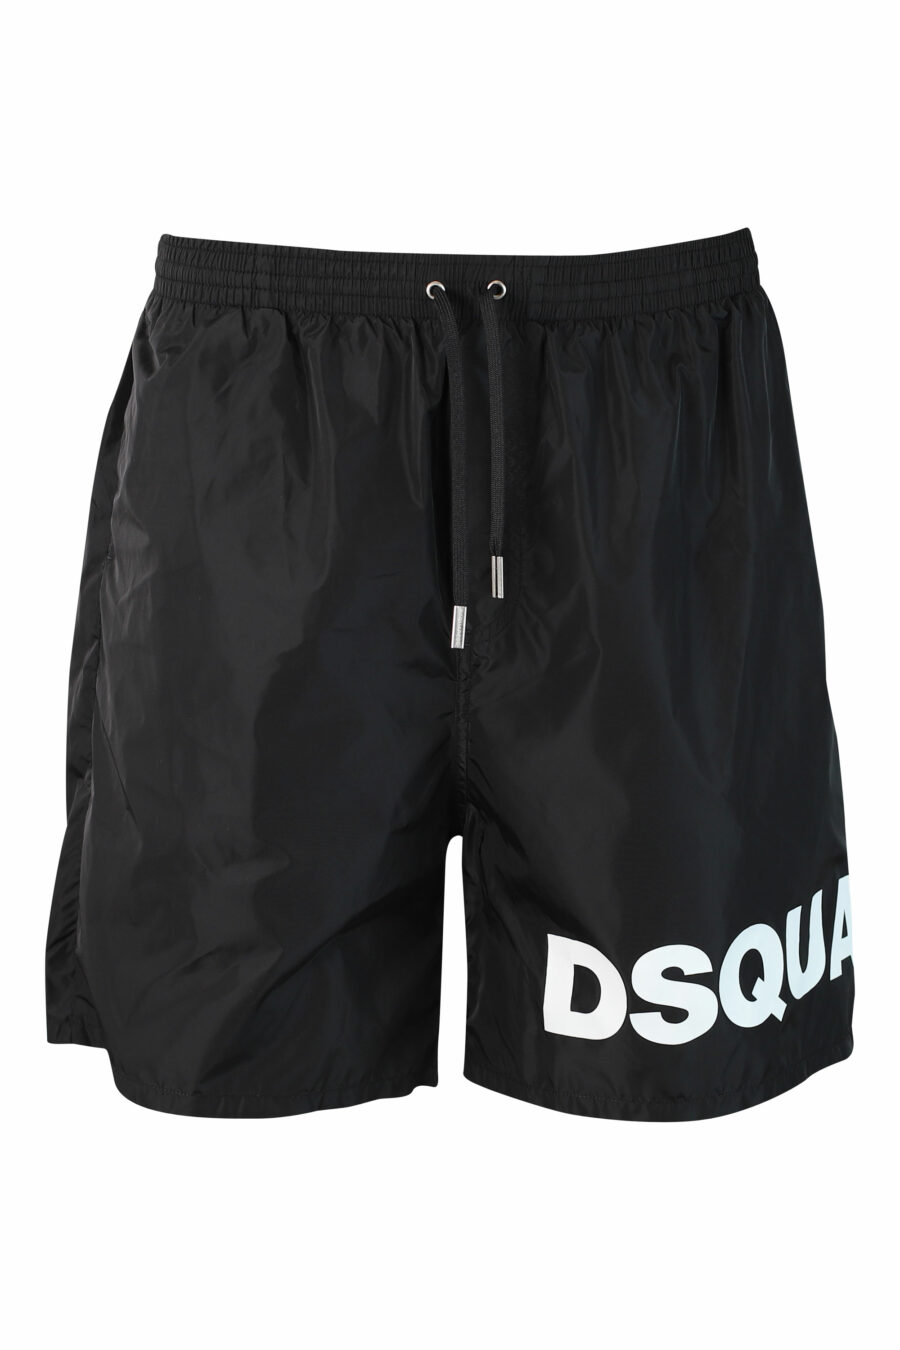 Dsquared2 - Bañador negro con maxilogo blanco lateral - BLS Fashion